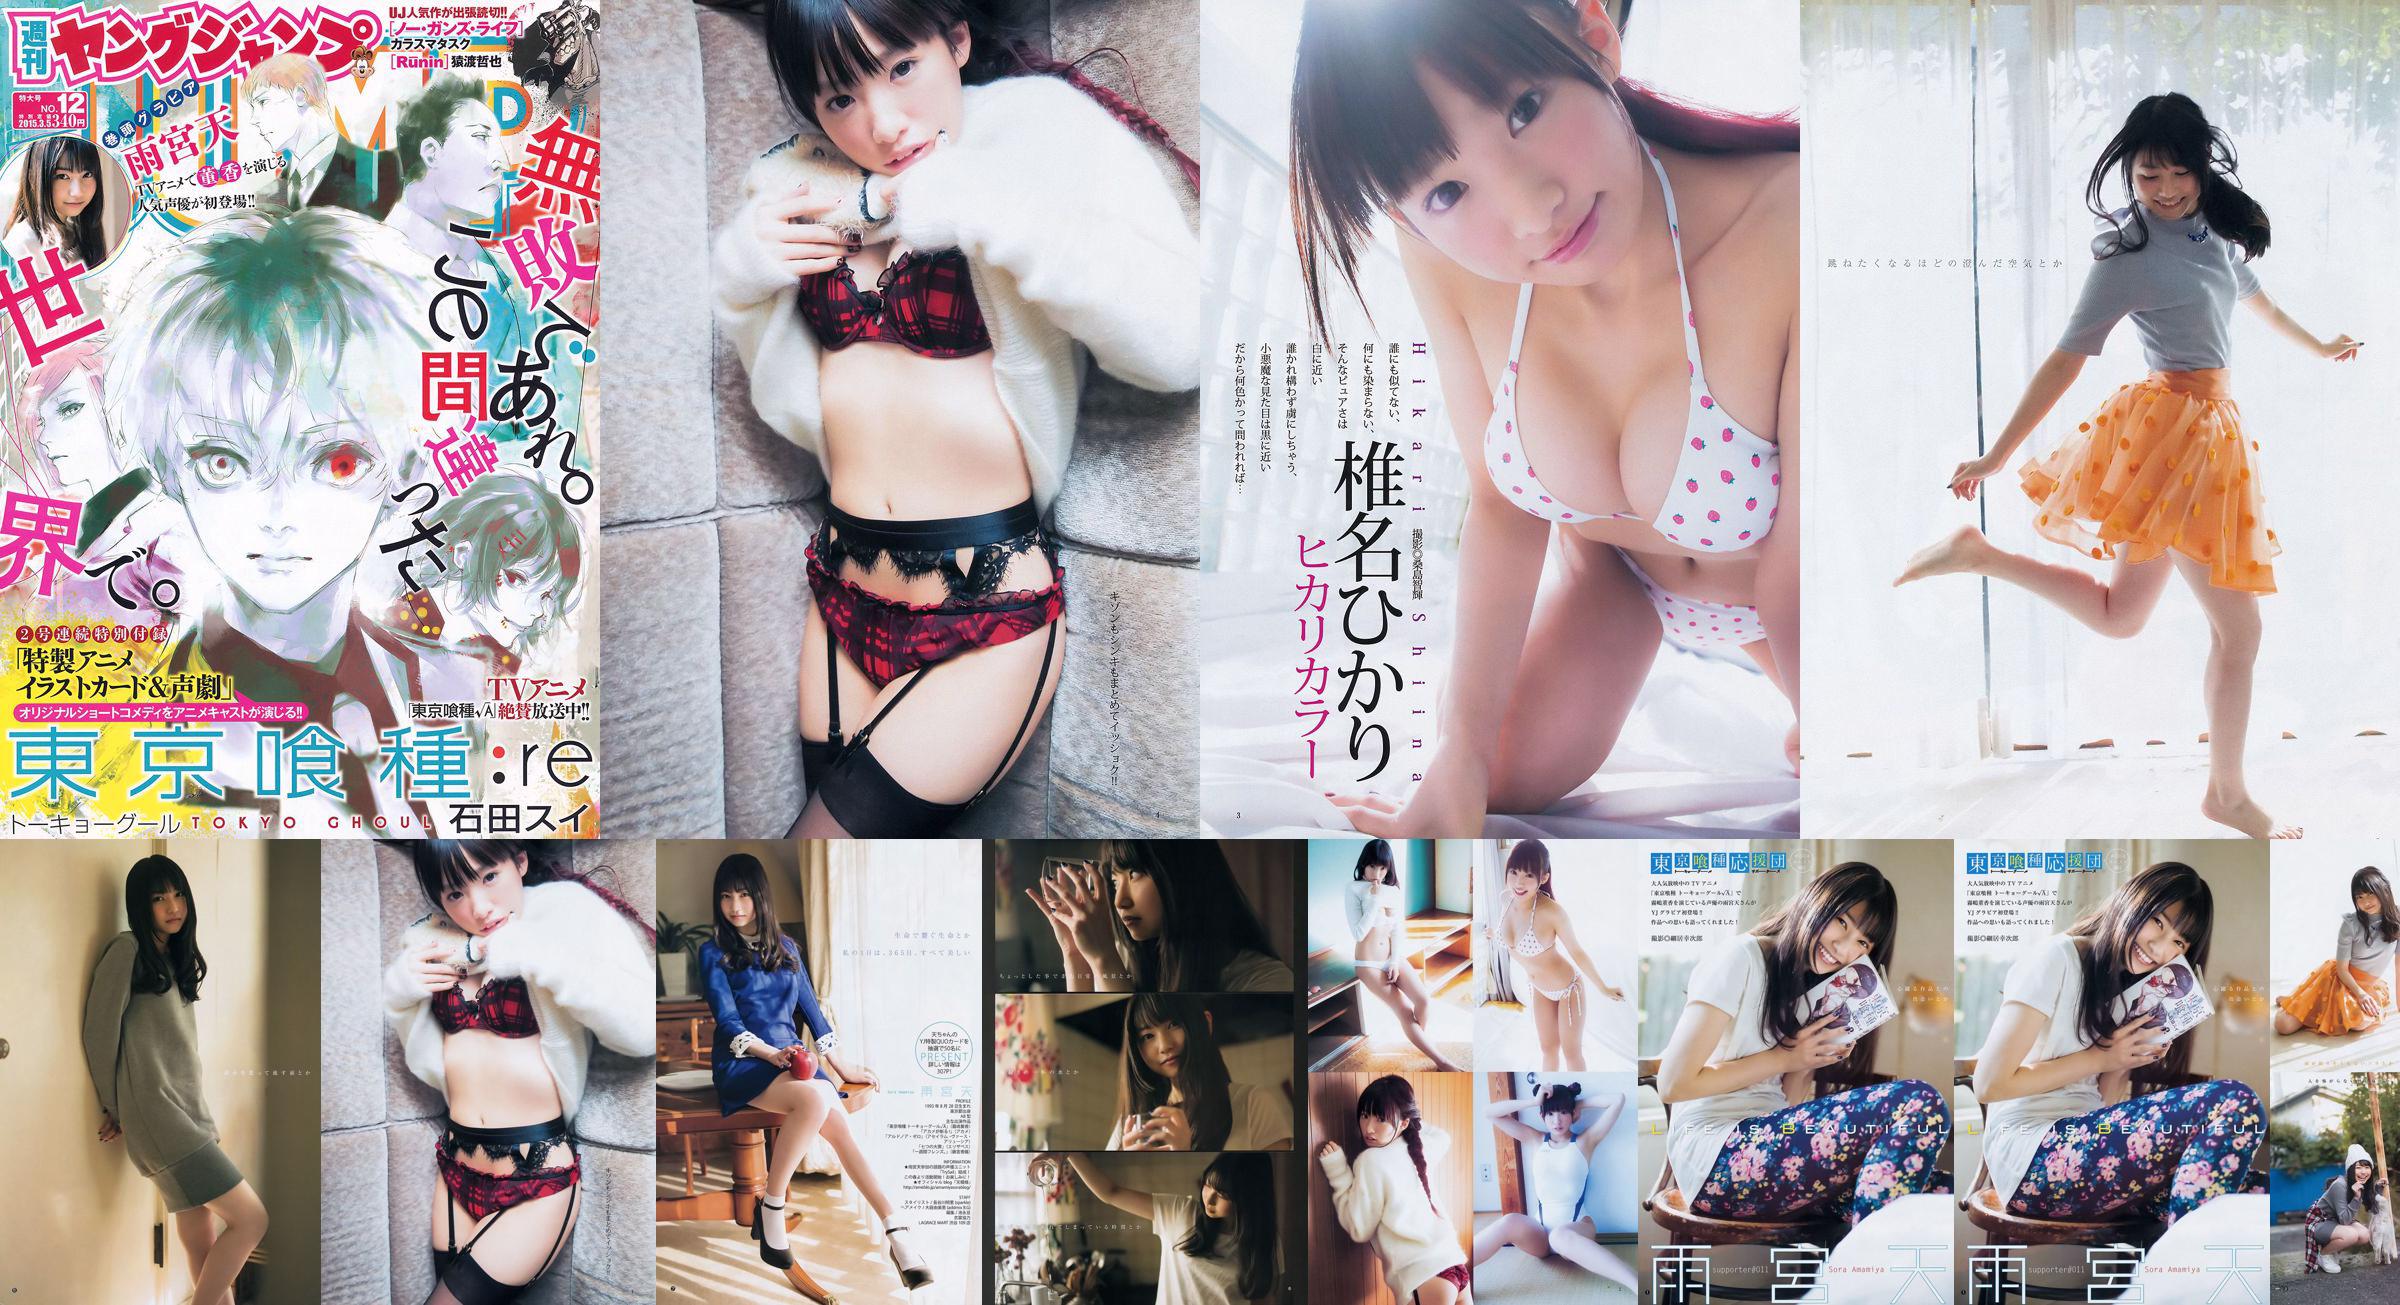 Amamiya Tian Shiina ひ か り [Jeune saut hebdomadaire] 2015 n ° 12 Photo Magazine No.9c6cb4 Page 3